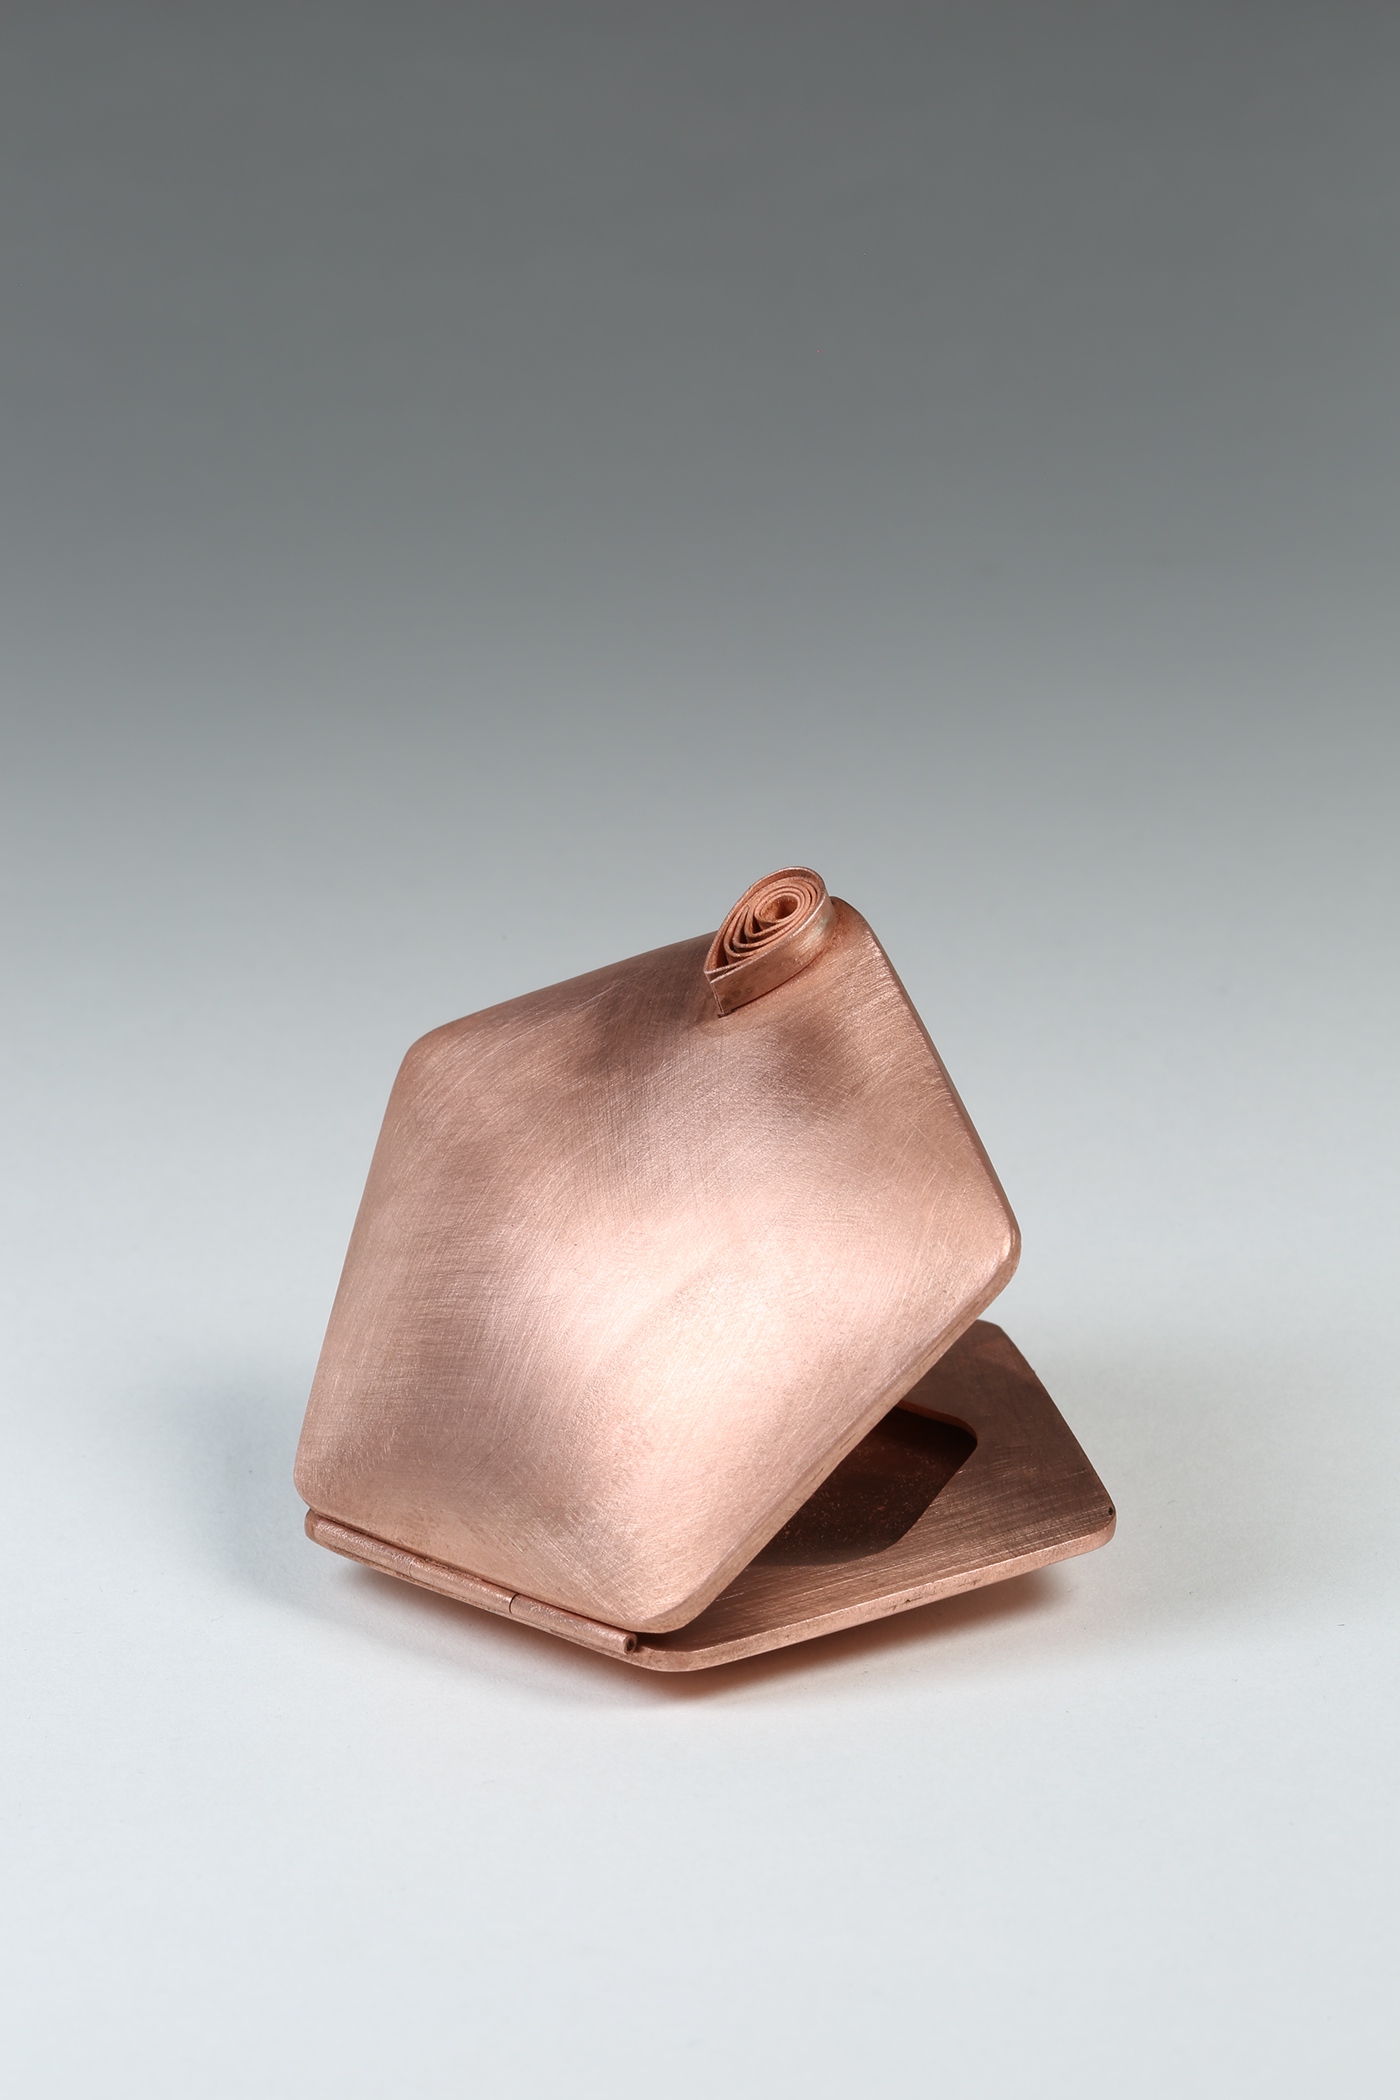 copper dye-formed hinge box